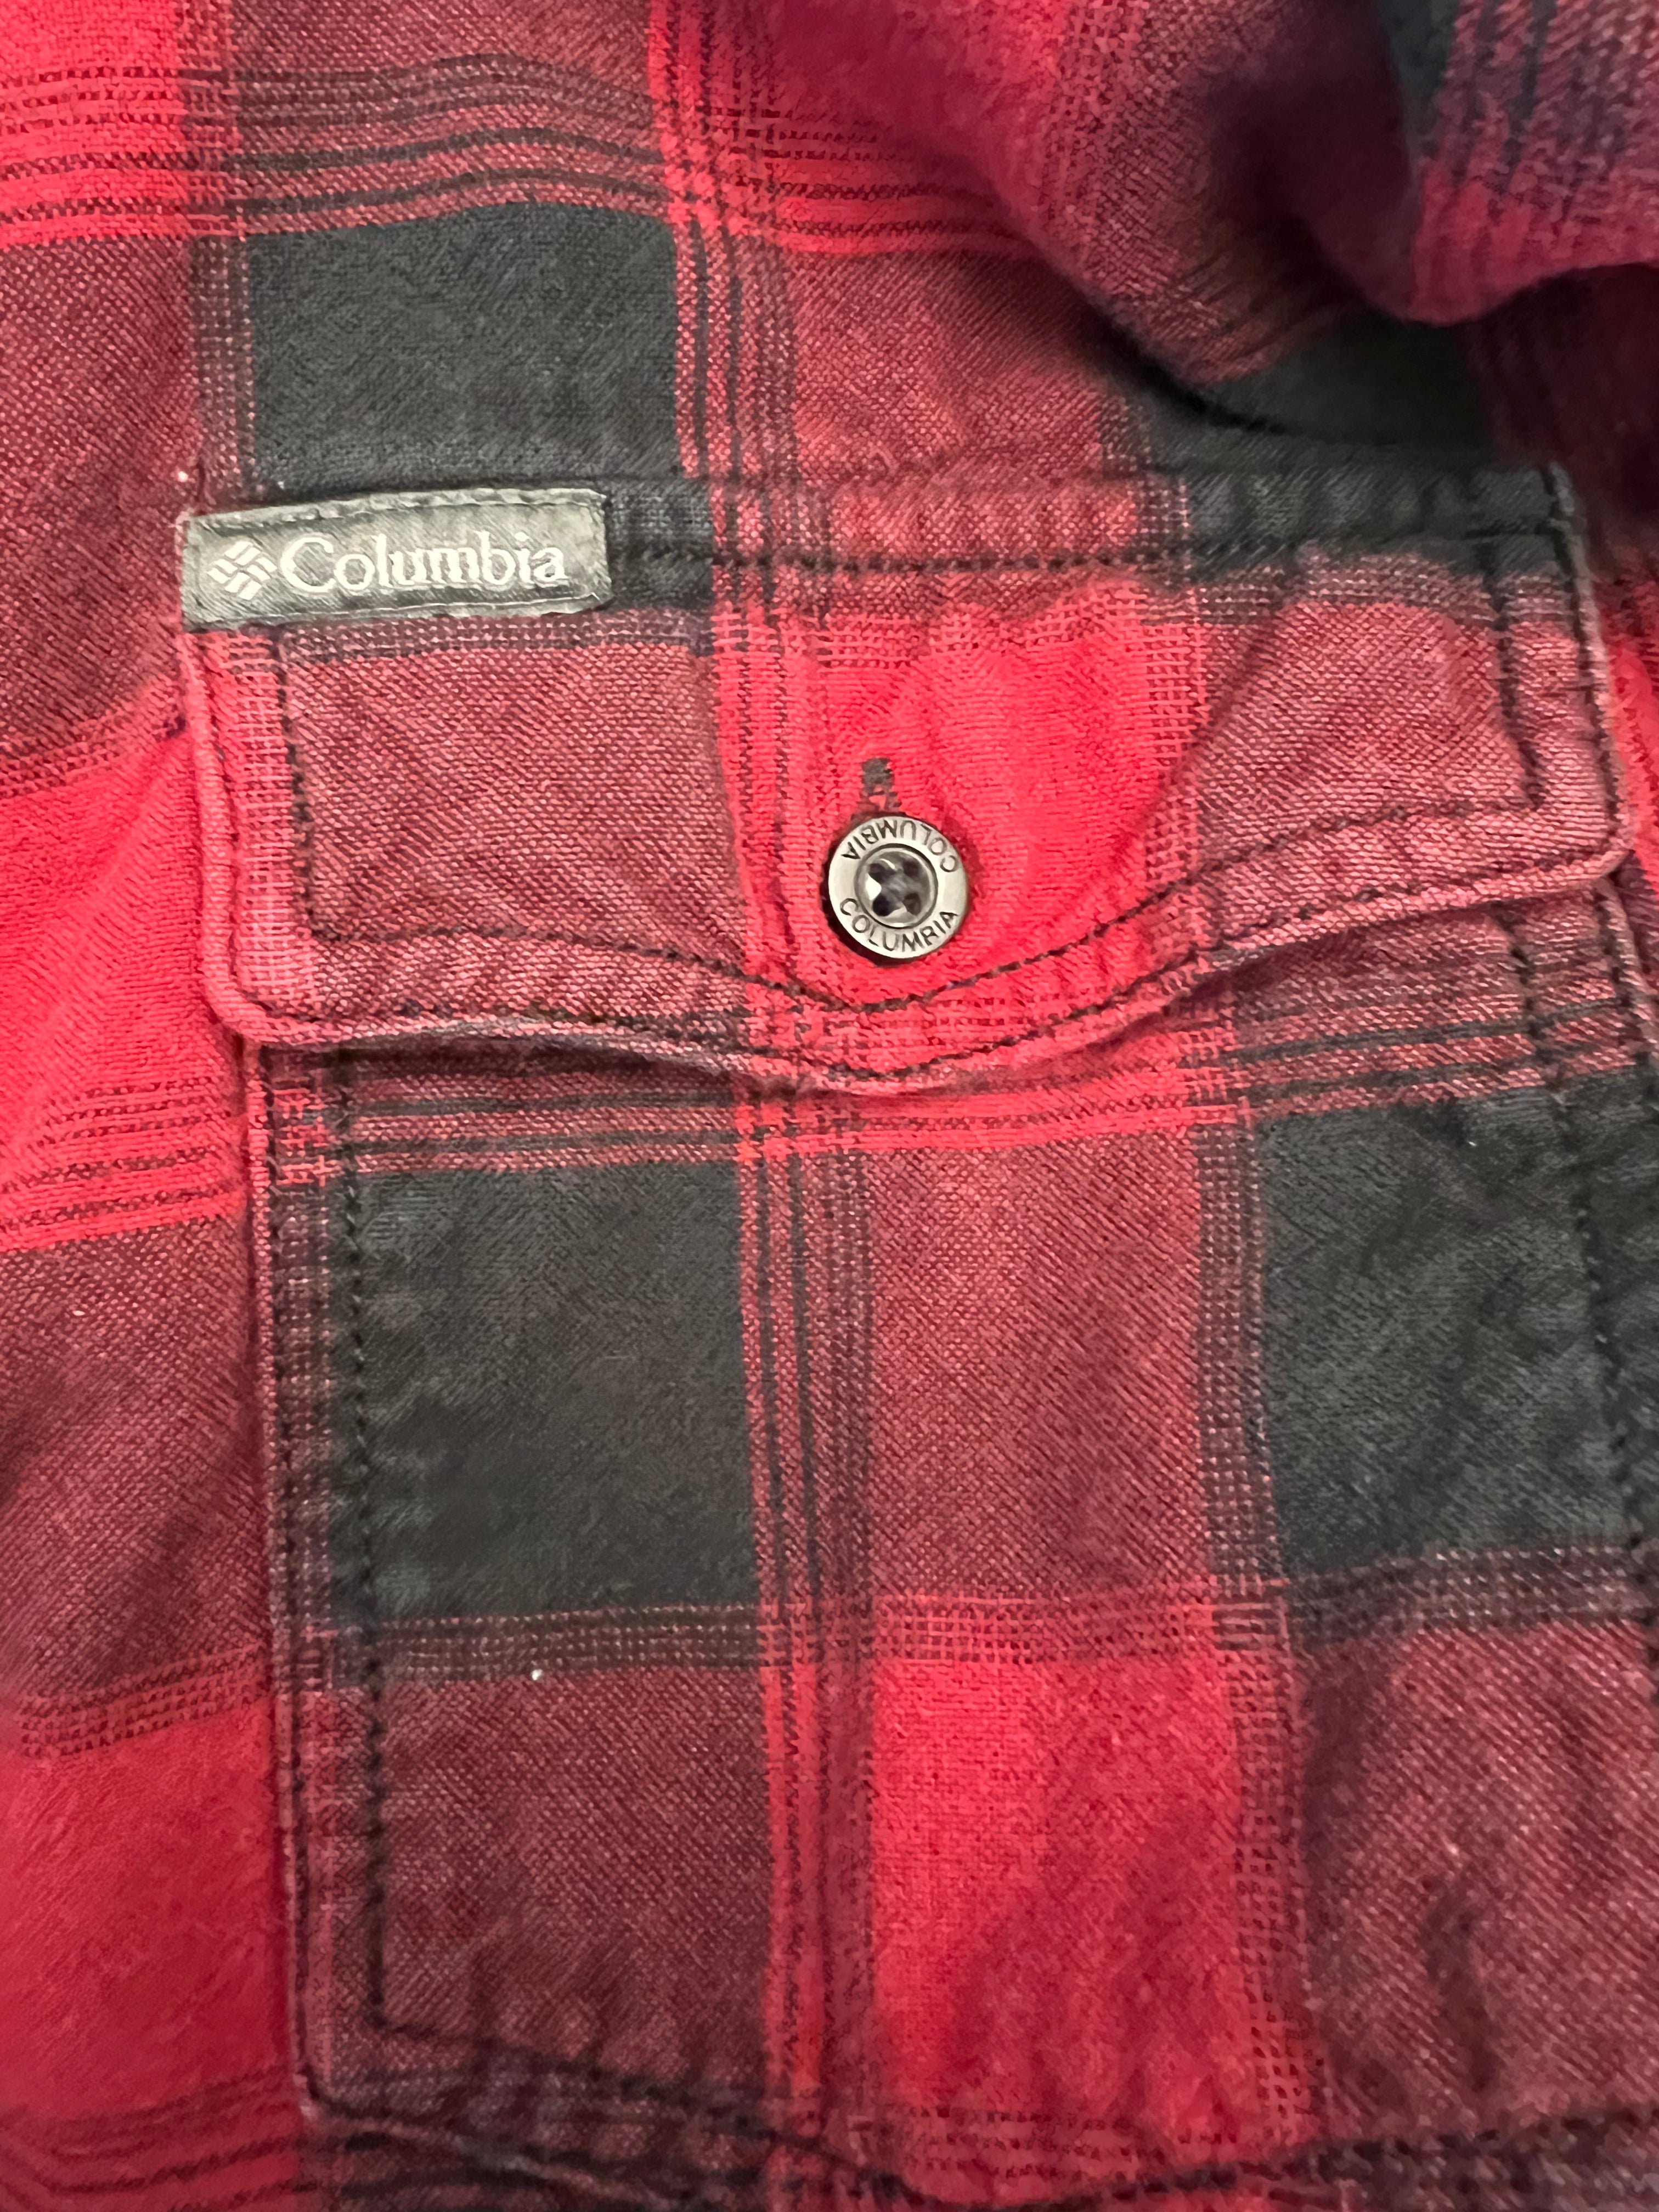 San Francisco 49ers one of a kind custom Columbia lumberjack plaid shirt